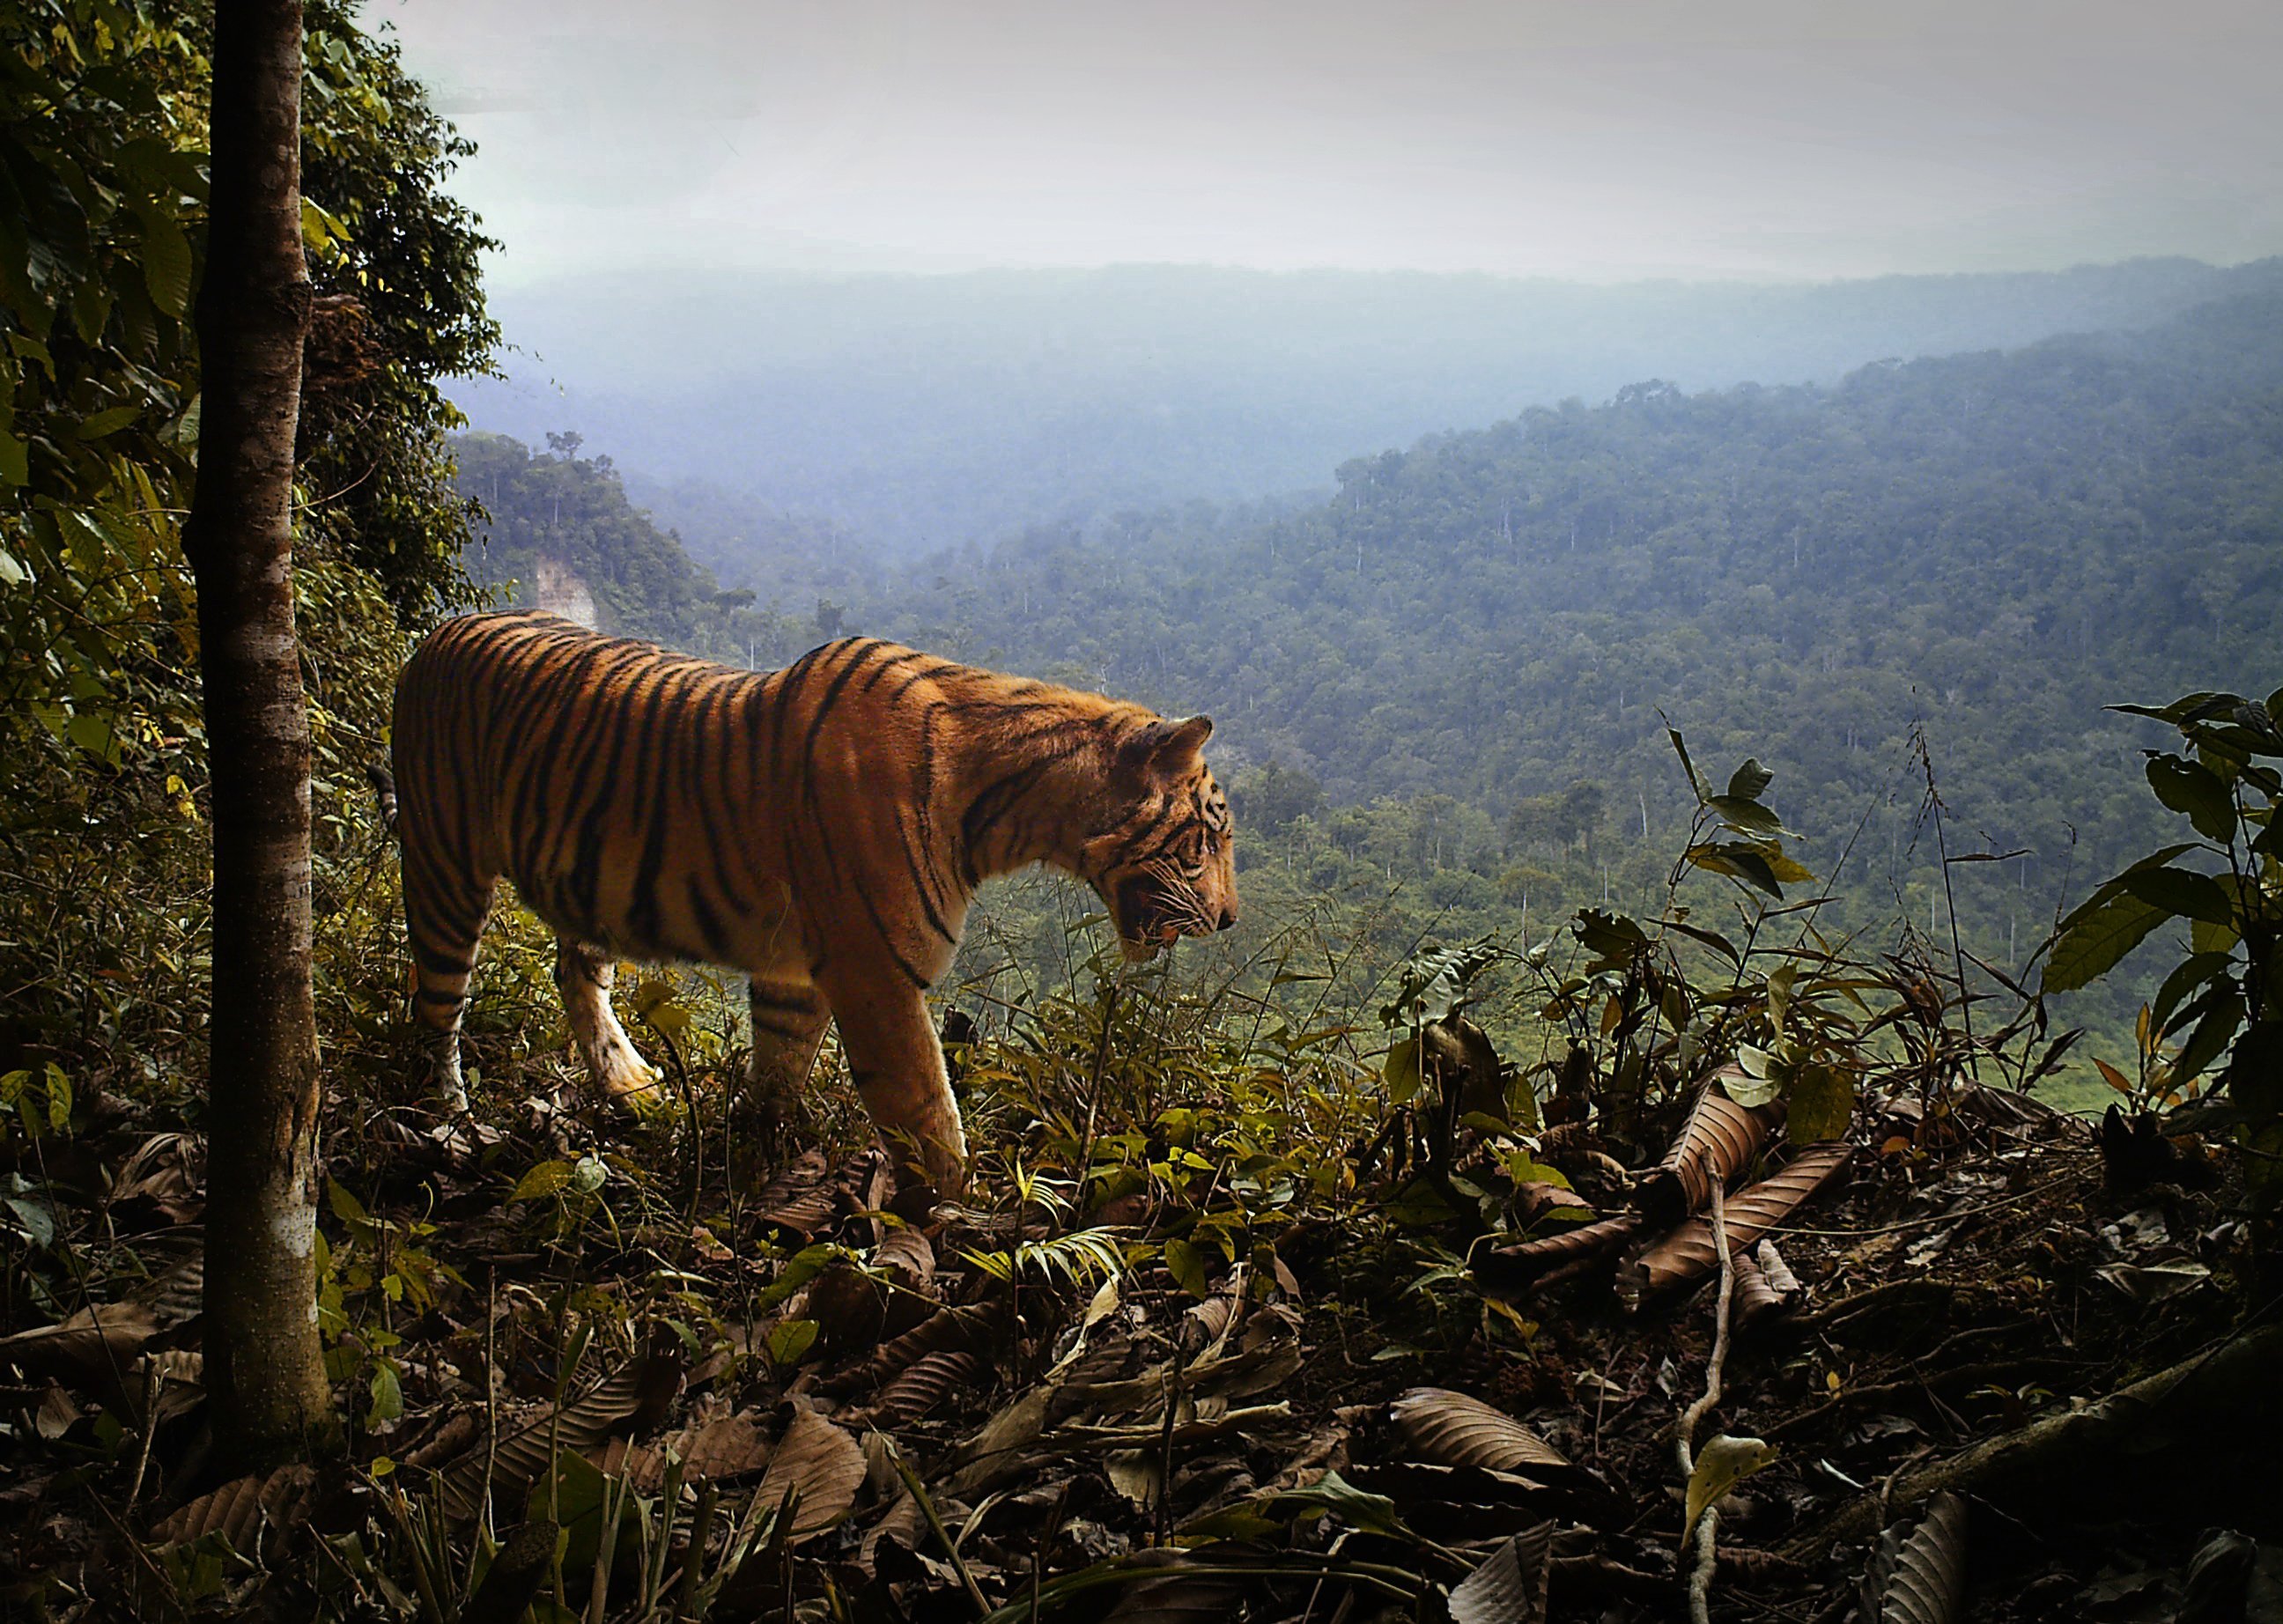 Jungle tiger. Суматра тигр. Тигр тропического леса Индии. Малайский тигр (Panthera Tigris Jacksoni). Суматра остров фауна.